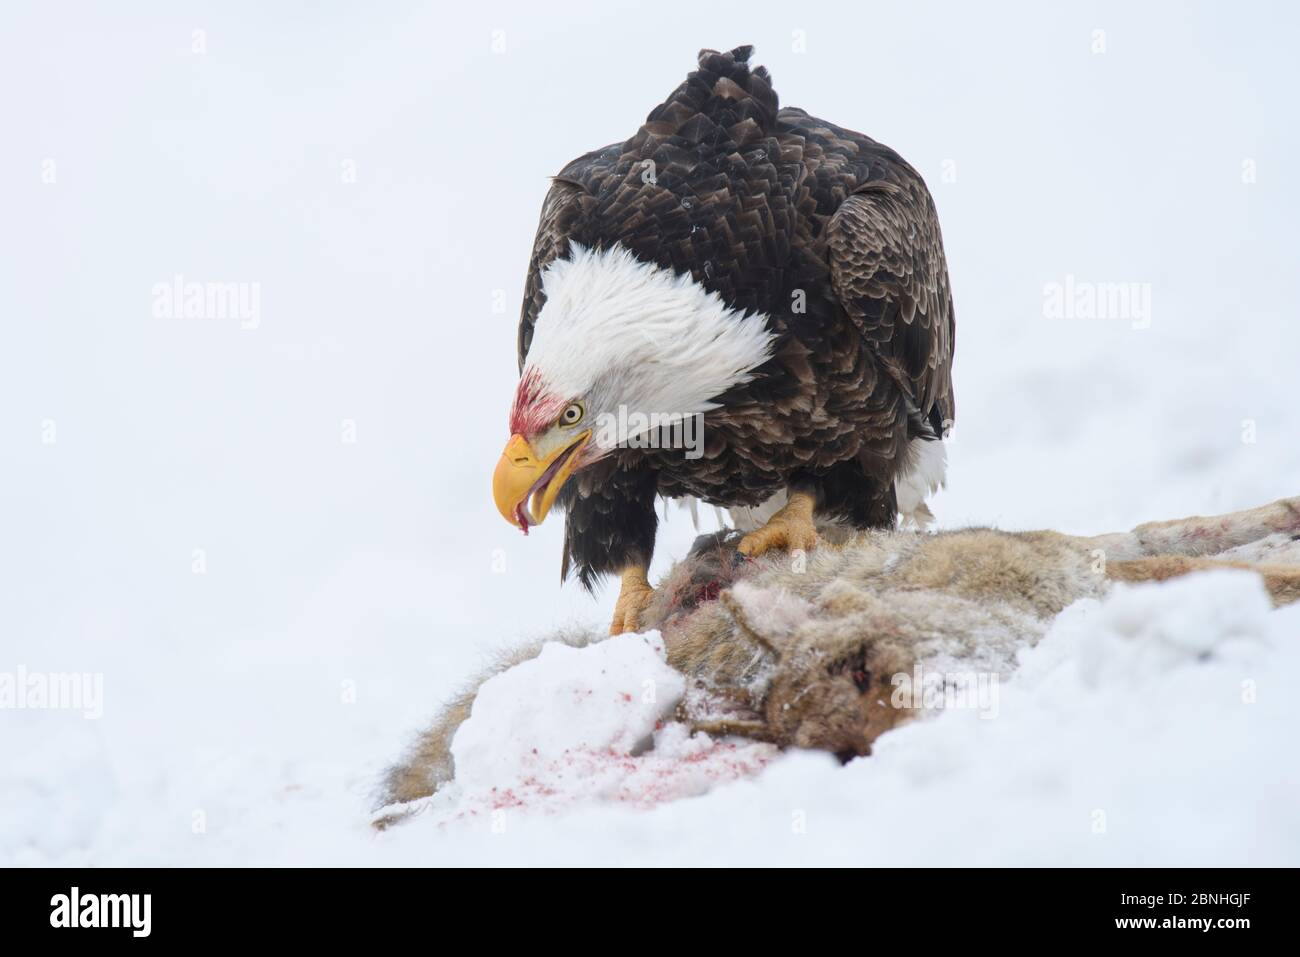 Bald eagle (Haliaeetus leucocephalus) feeding on Mule deer roadkill in winter snow, Okanogan County, Washington, USA Stock Photo